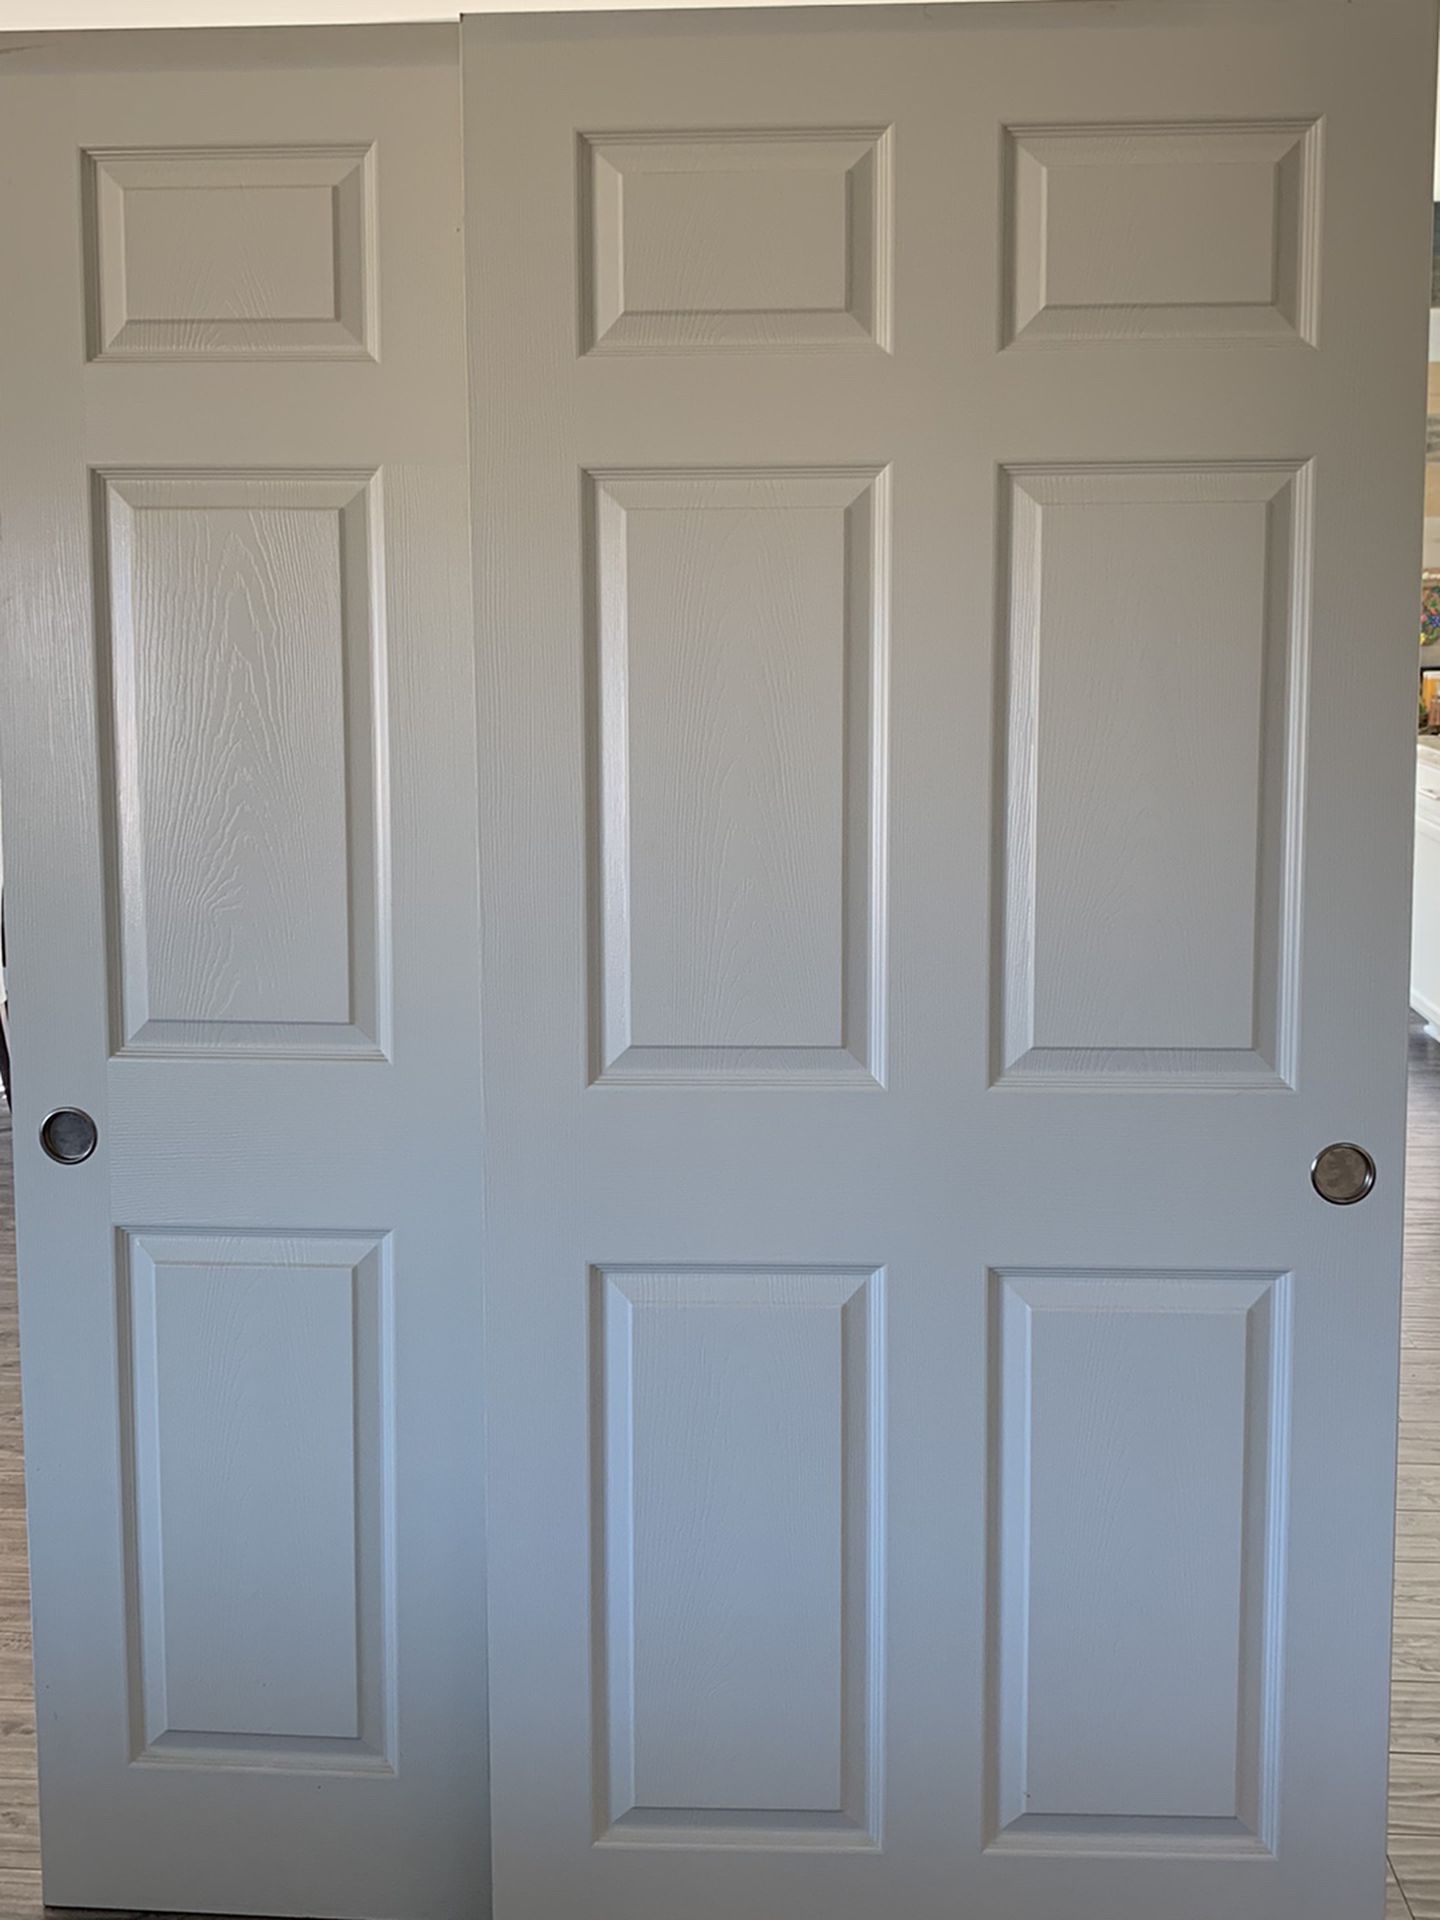 Closet Doors 30x78 “ (2) For $50.00 OBO